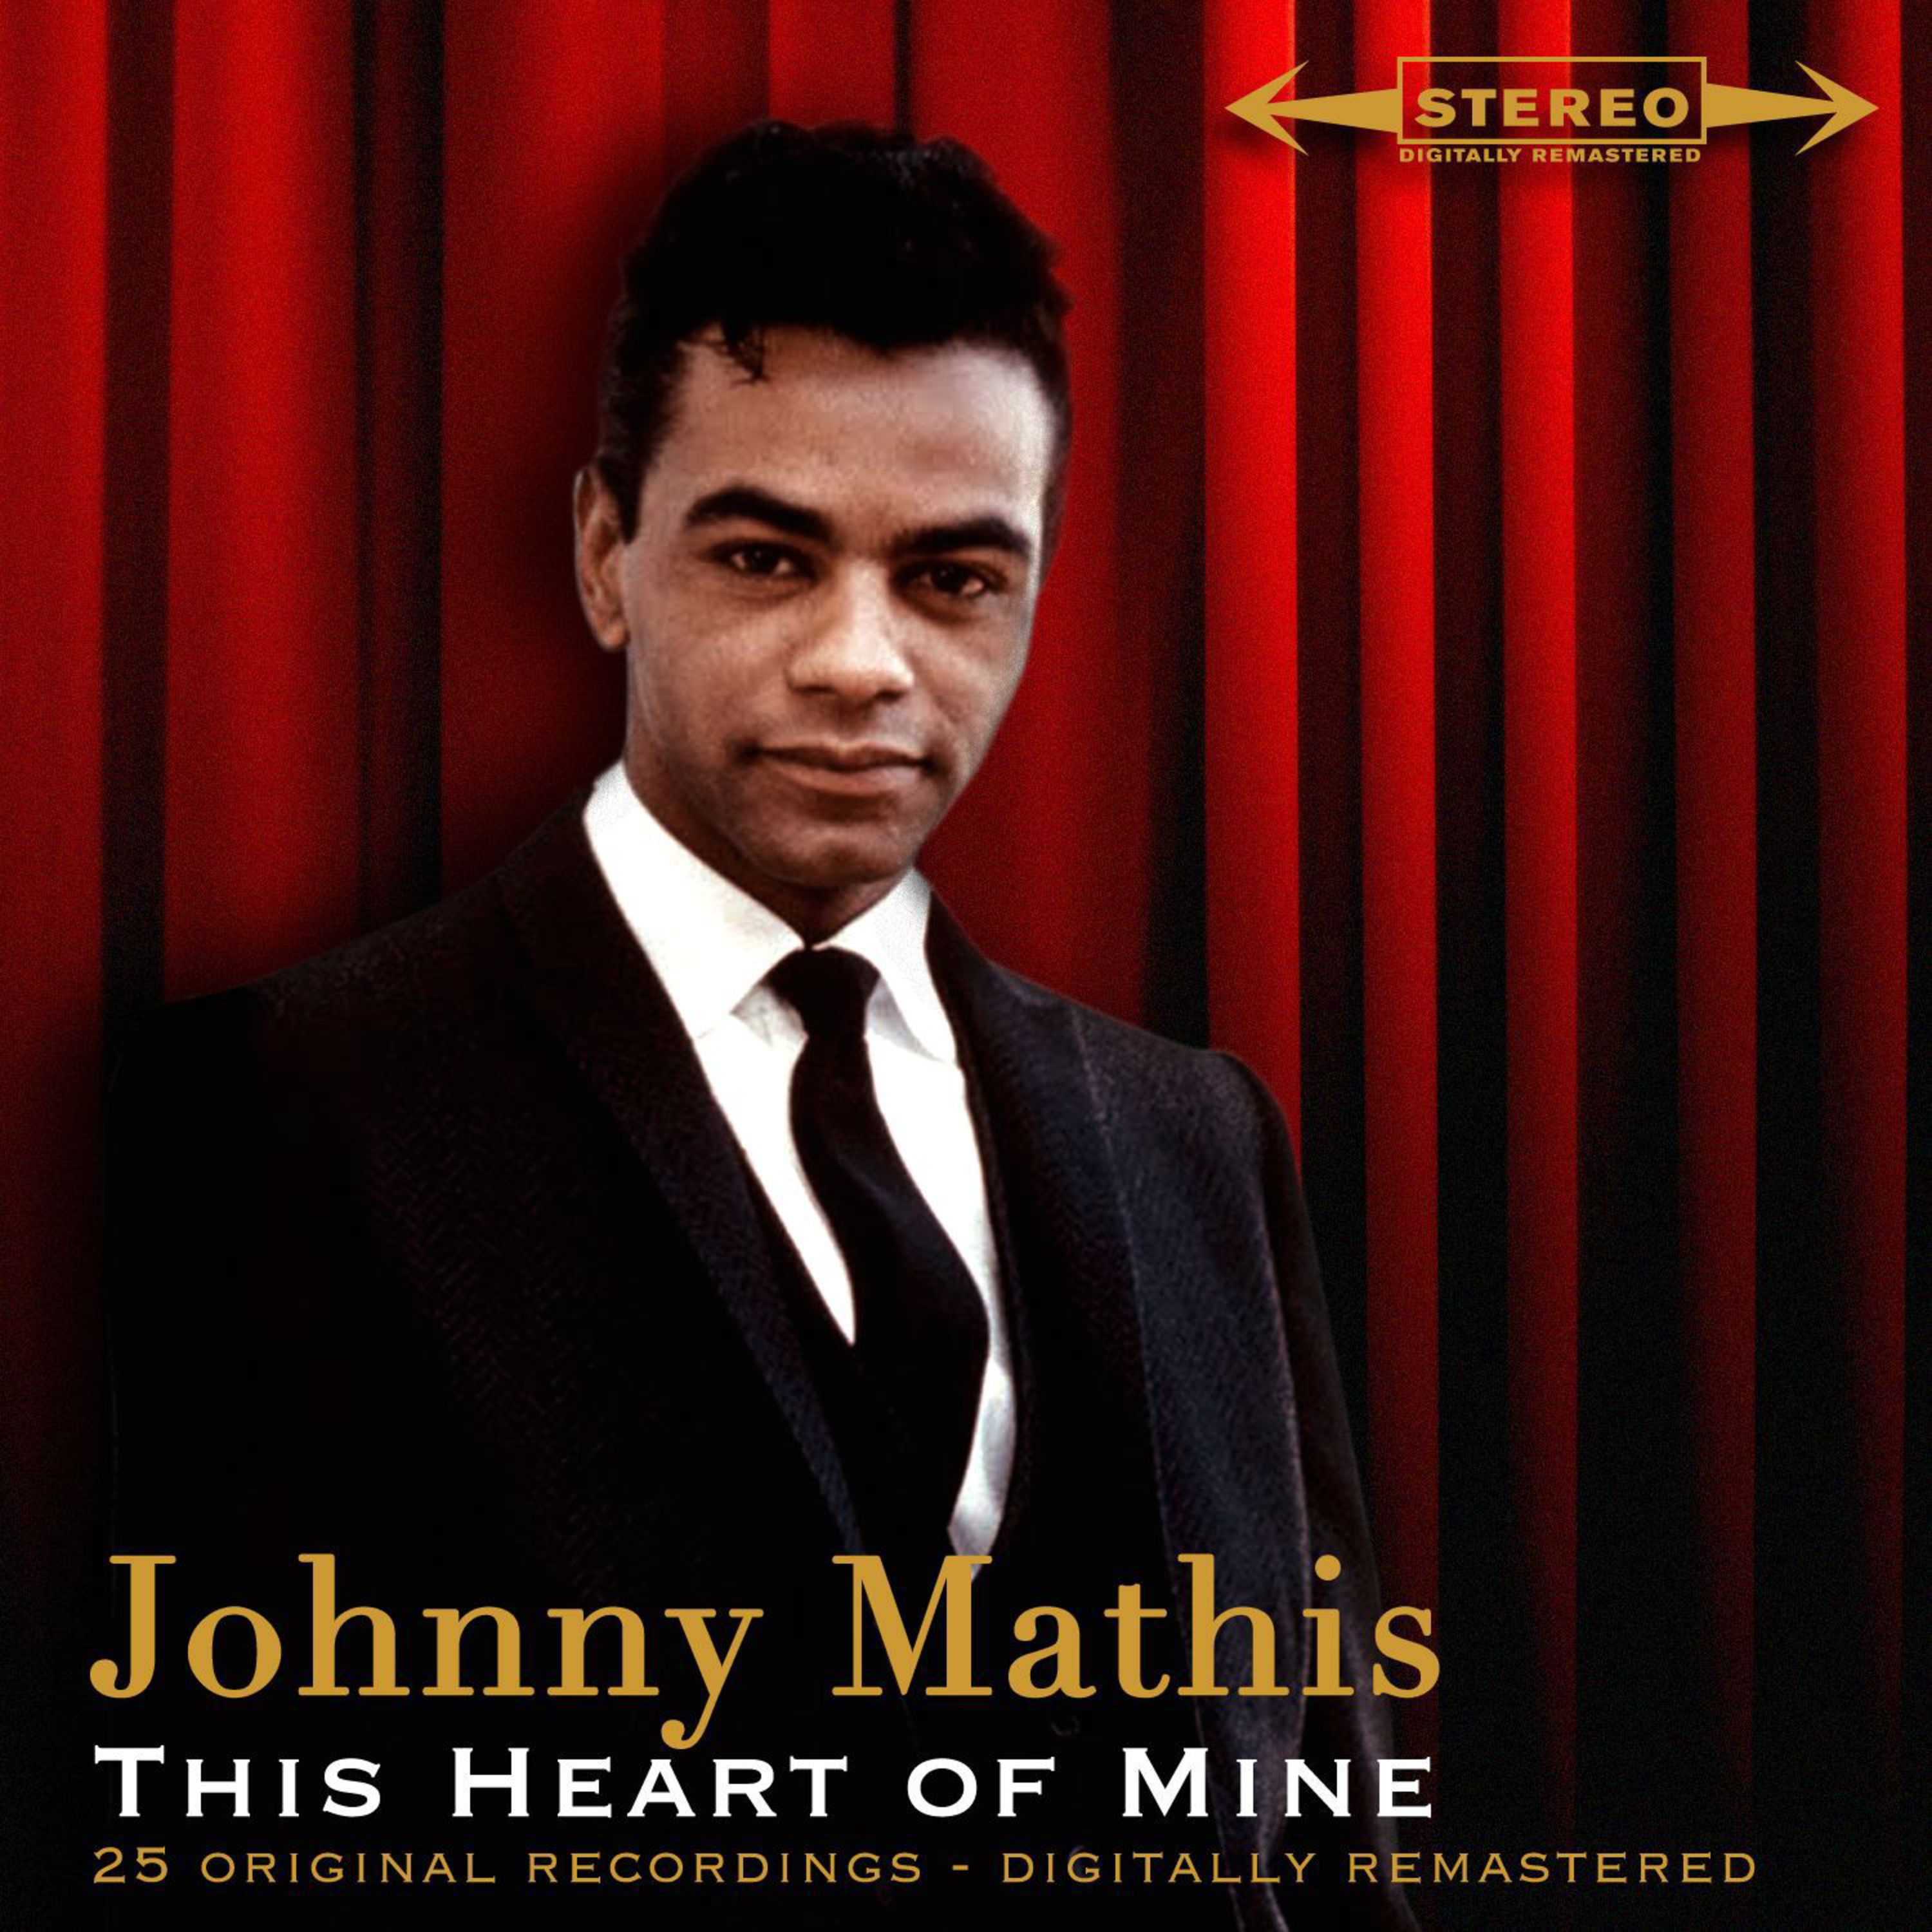 This Heart of Mine - 25 Original Recordings - Digitally Remastered